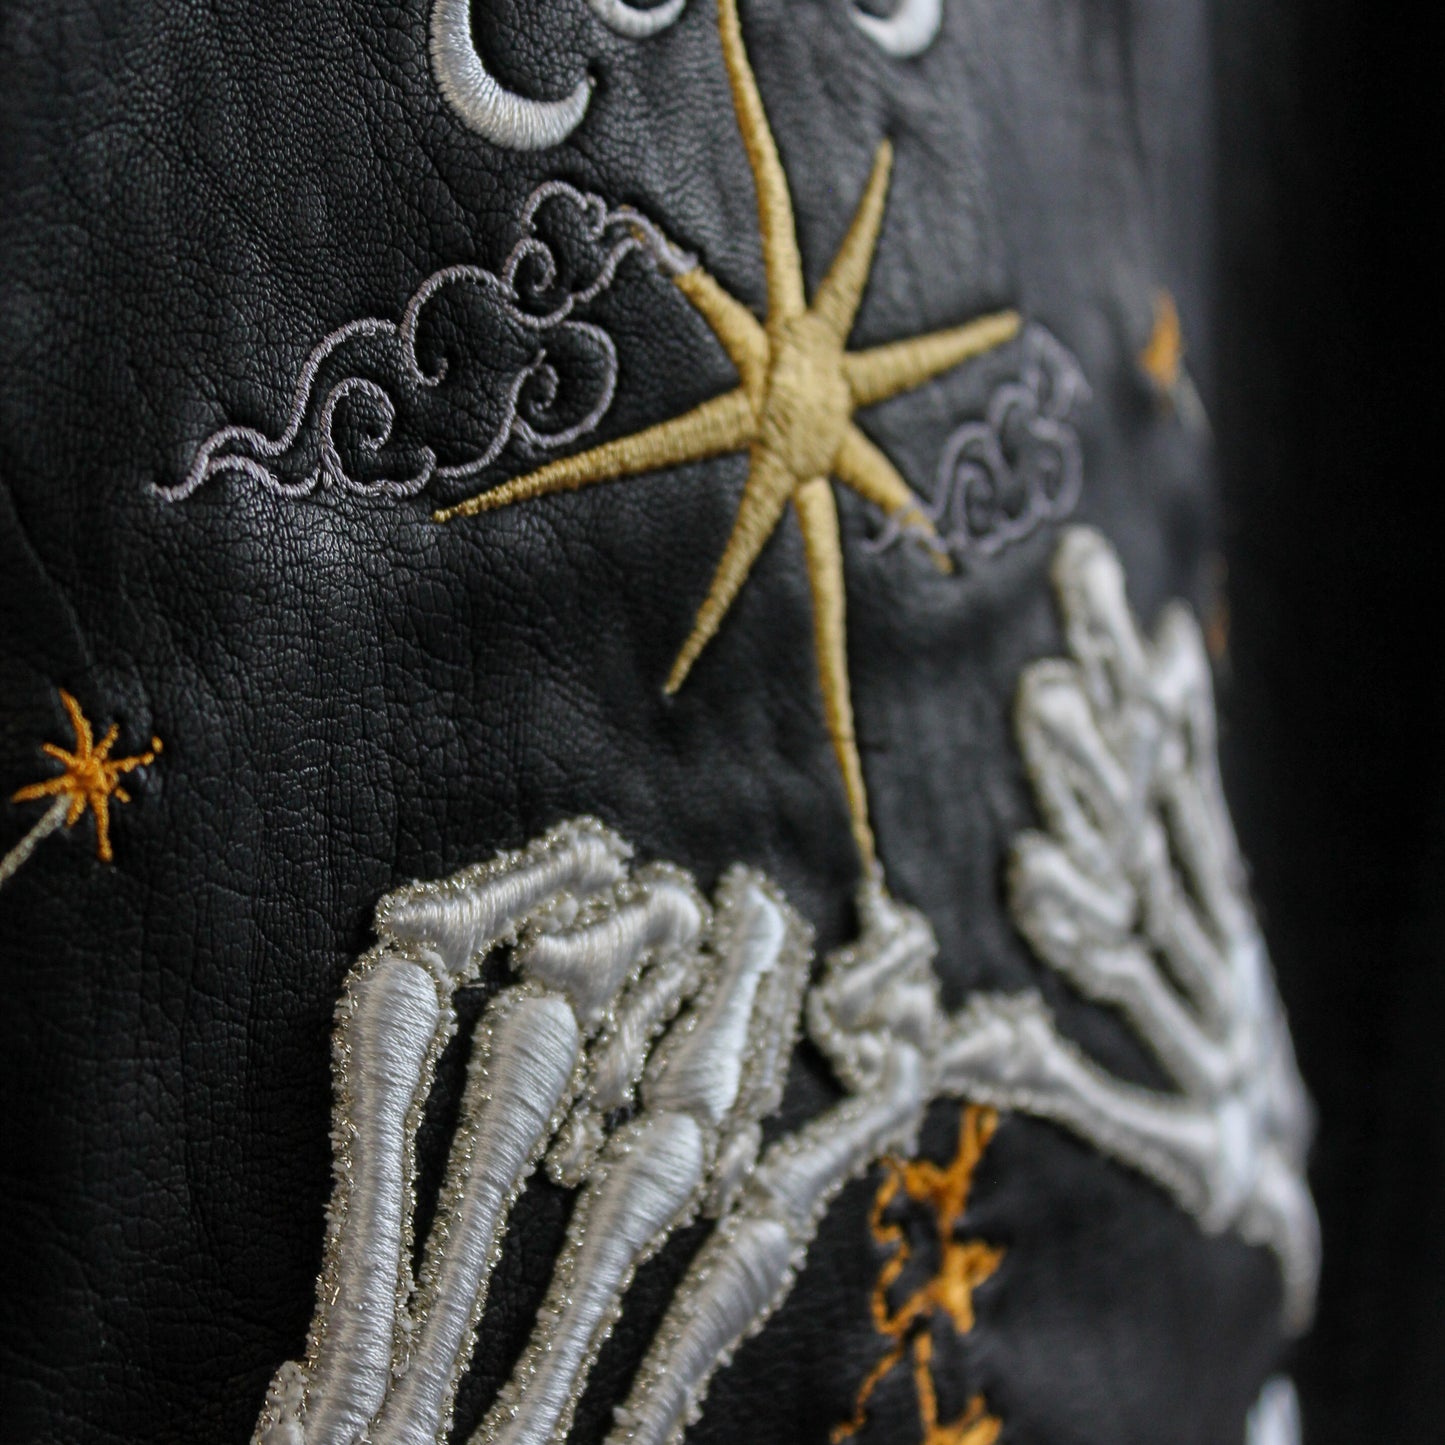 Celestial-themed black leather jacket for weddings